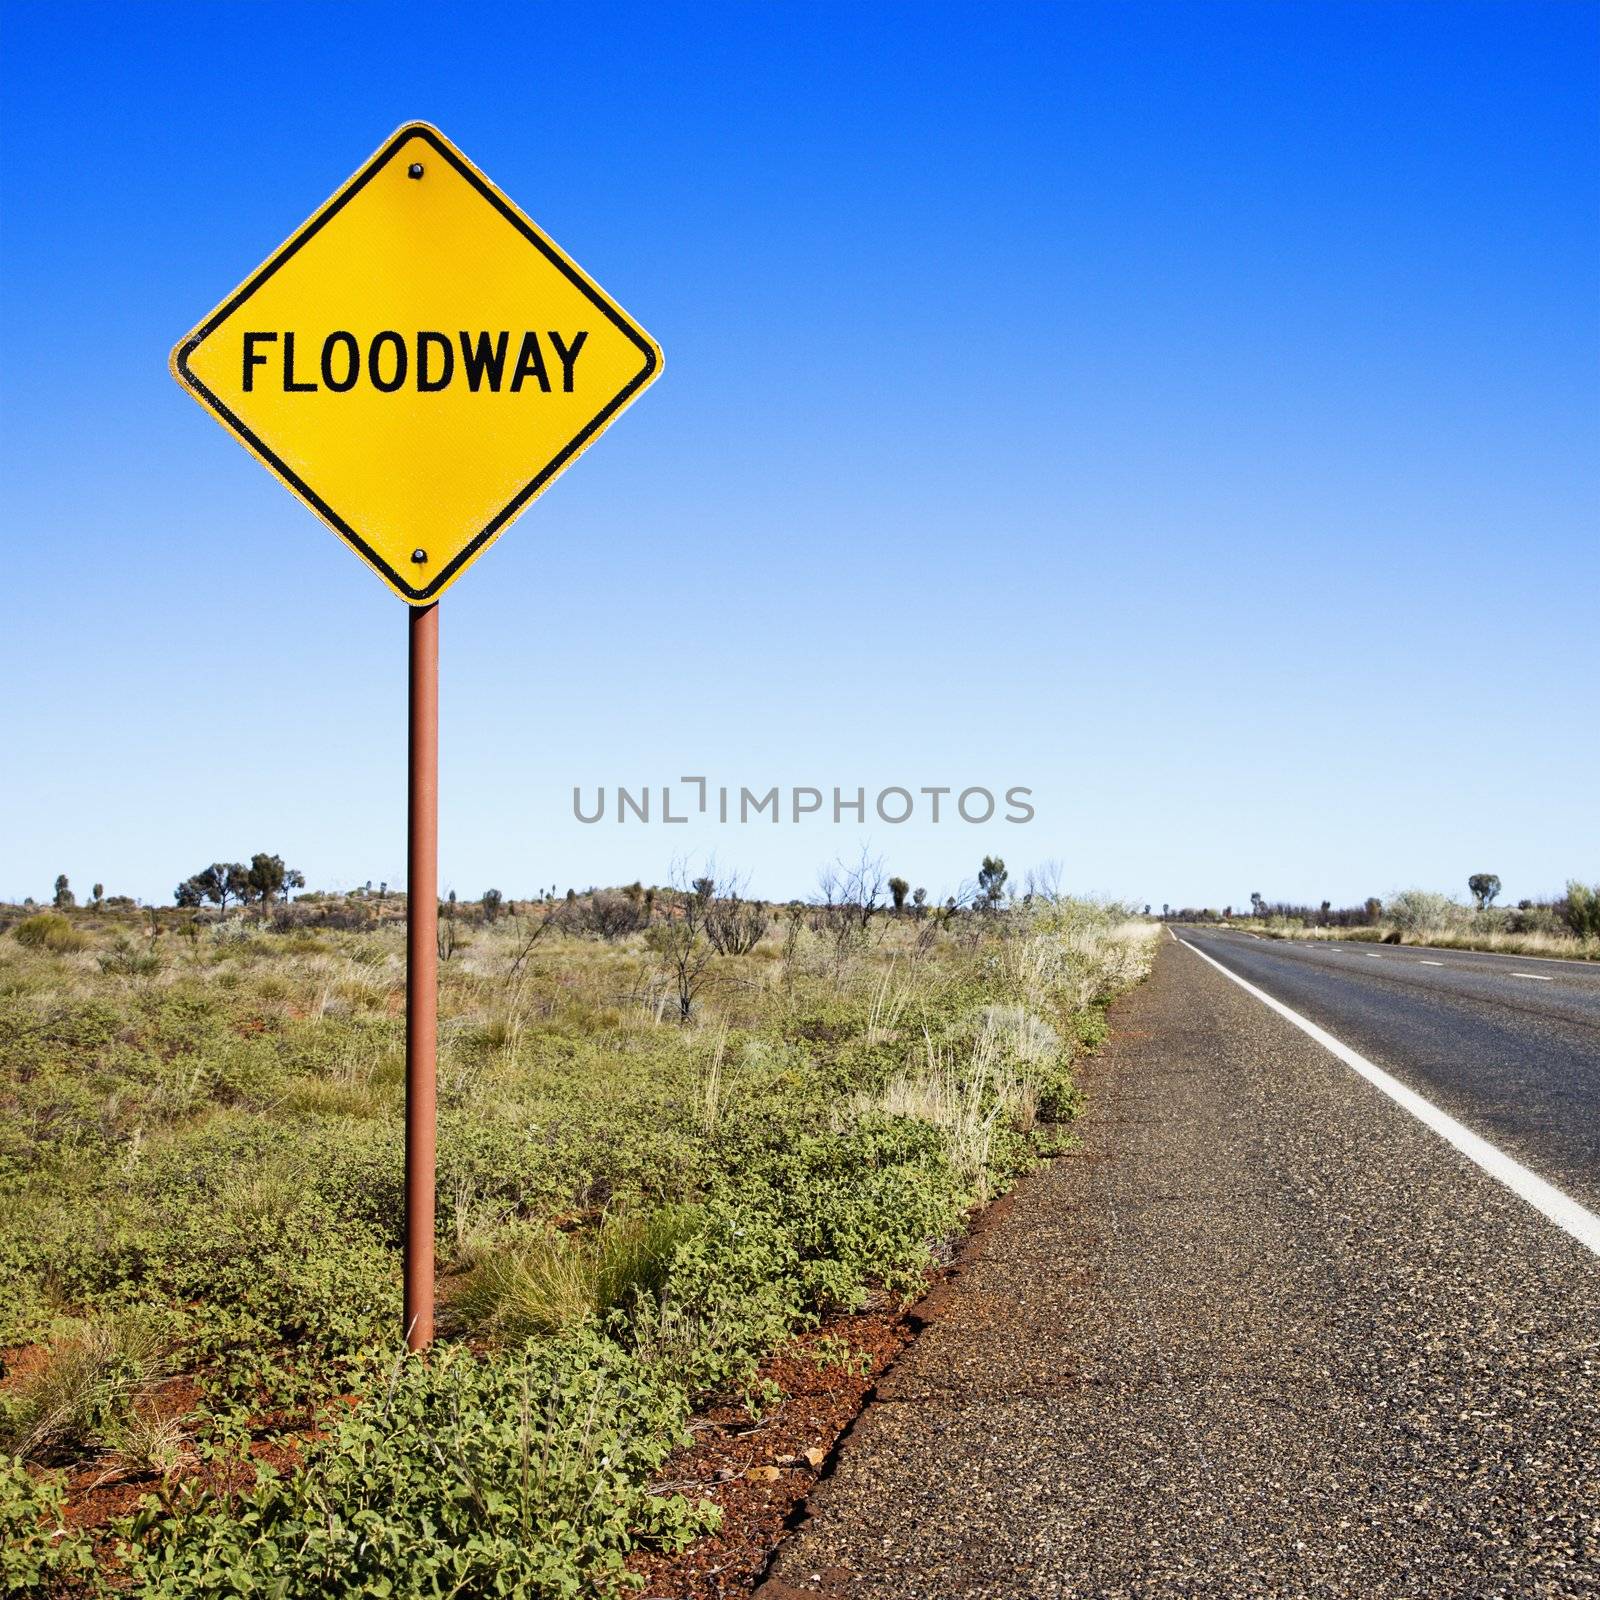 Floodway sign Australia by iofoto